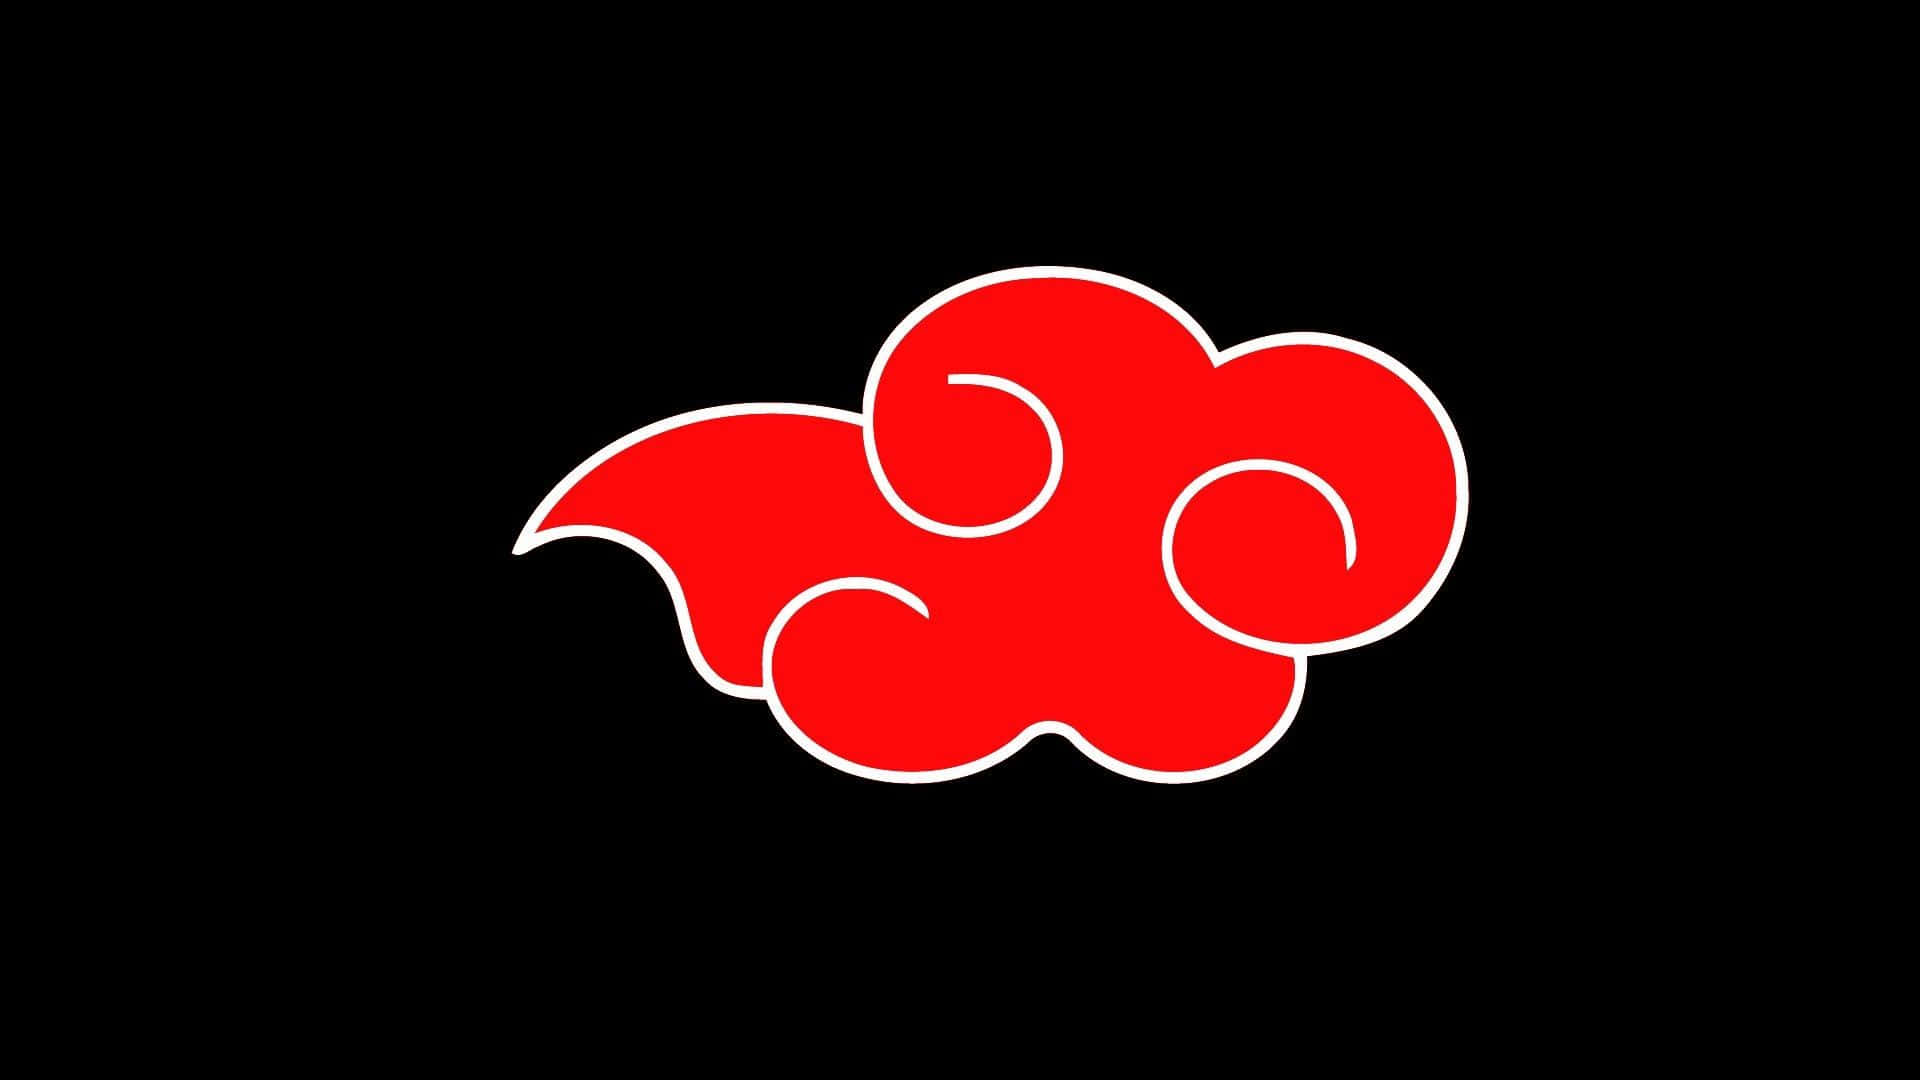 Akatsuki Symbol, Representing Strength and Power Wallpaper